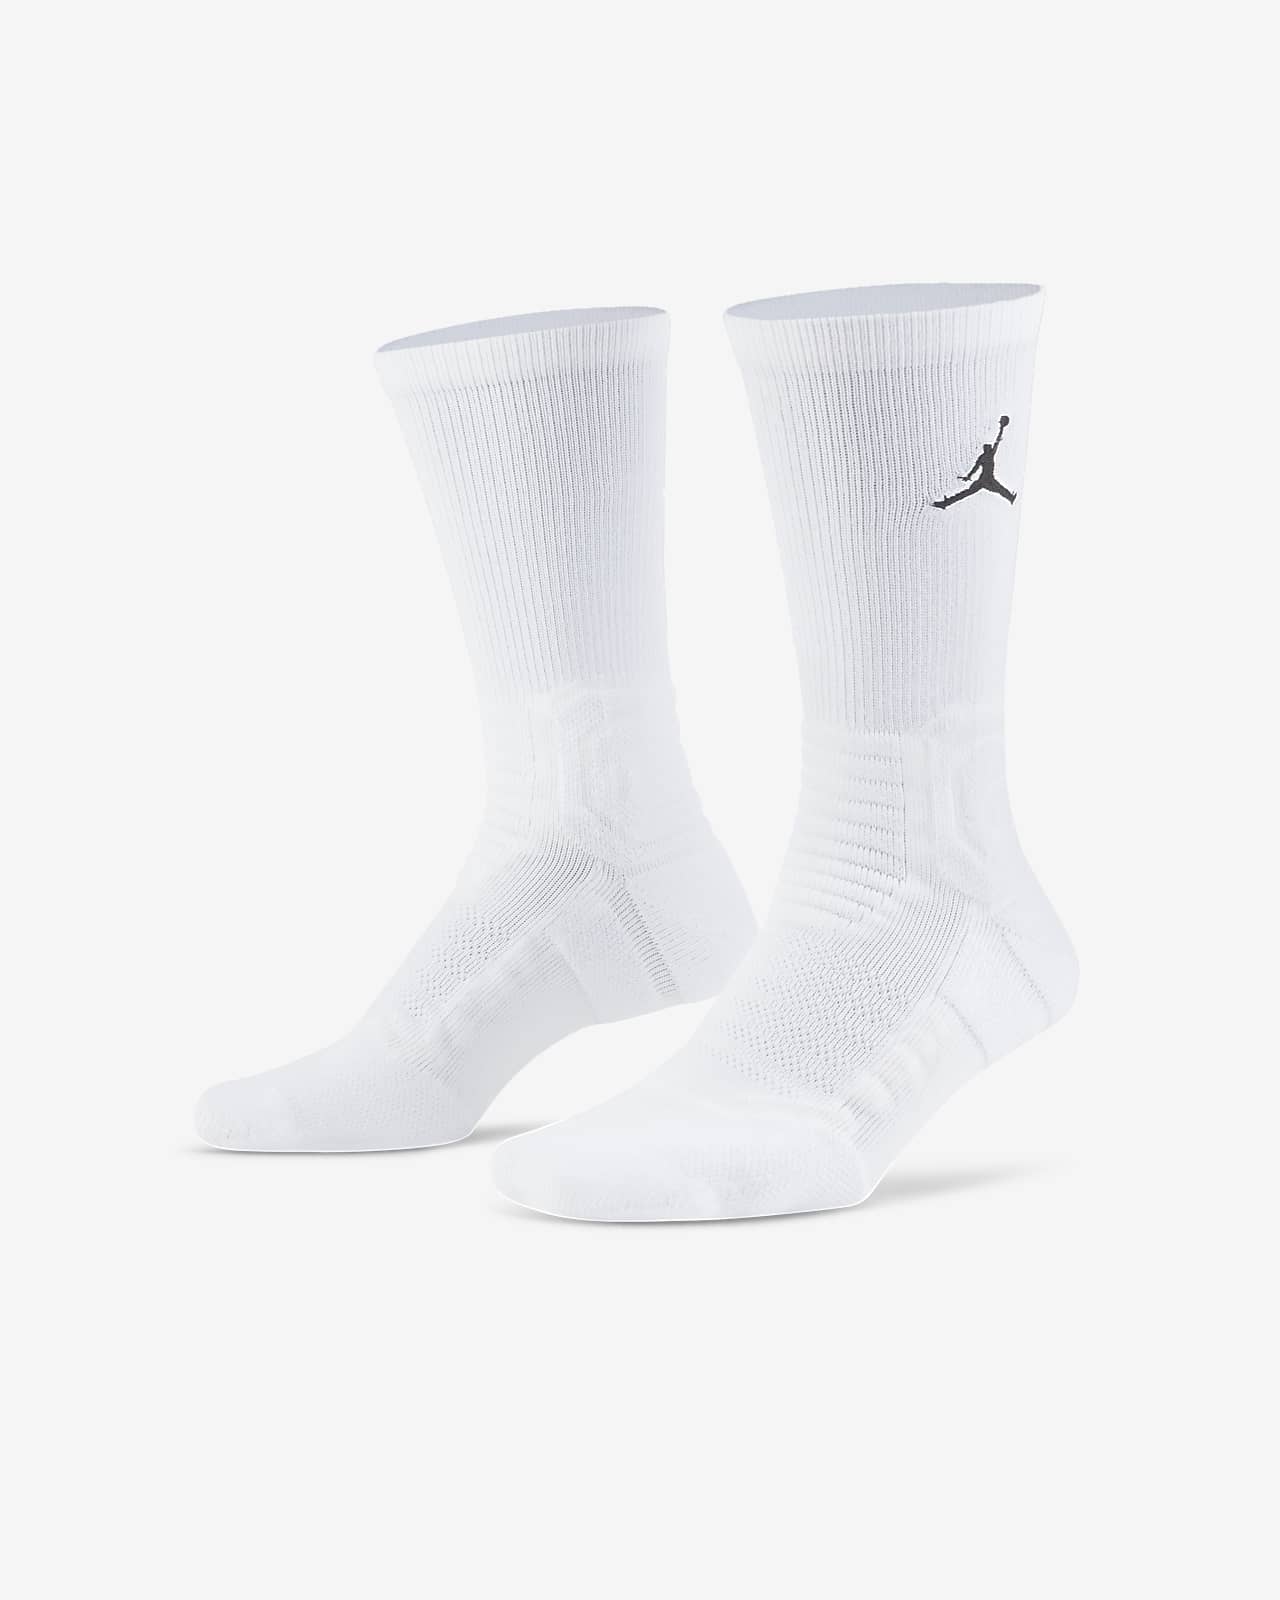 socks nike basketball